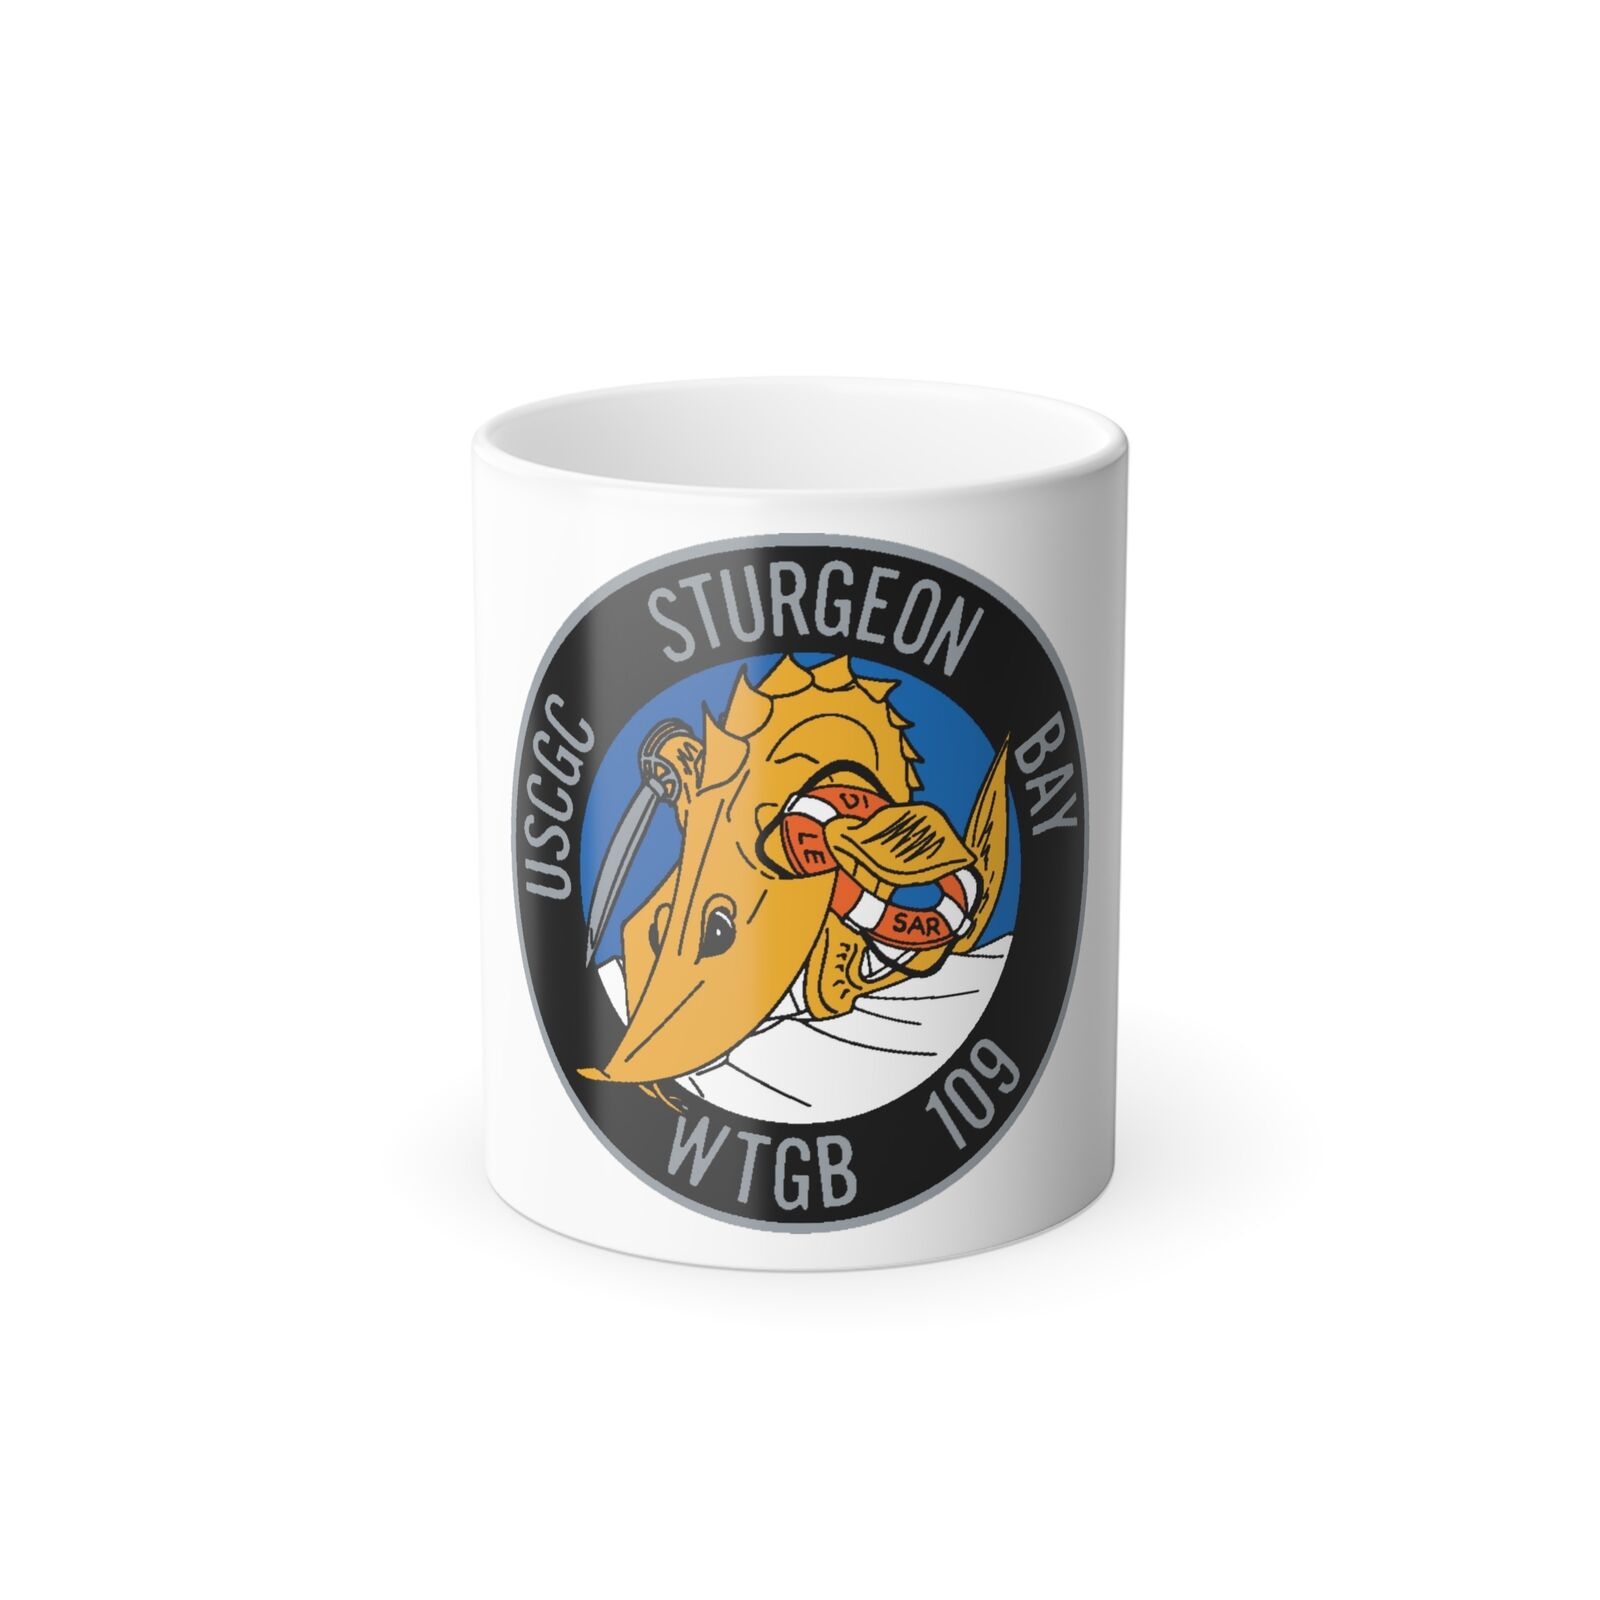 USCGC Sturgeon WTGB 109 (U.S. Coast Guard) Color Changing Mug 11oz